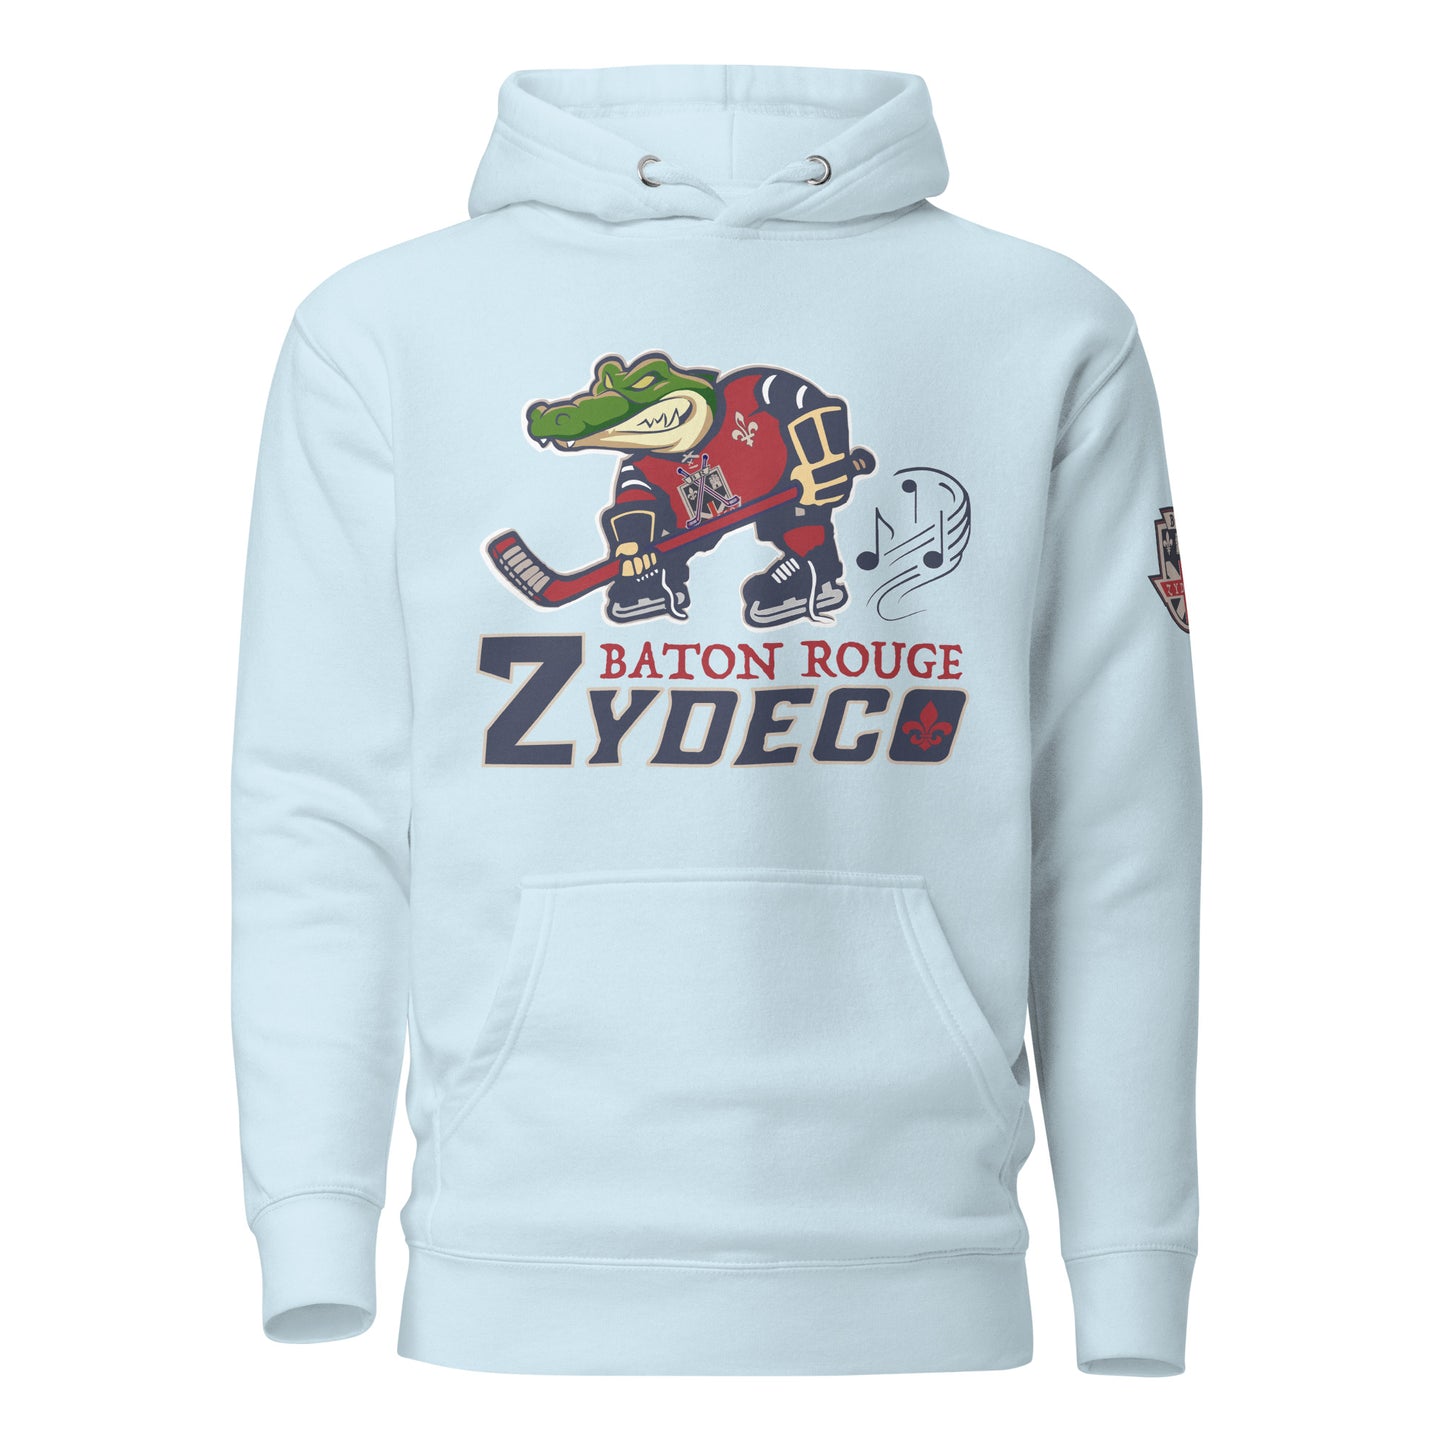 ZYDECO - AL LOGO & BADGE ON SLEEVE - Unisex Hoodie